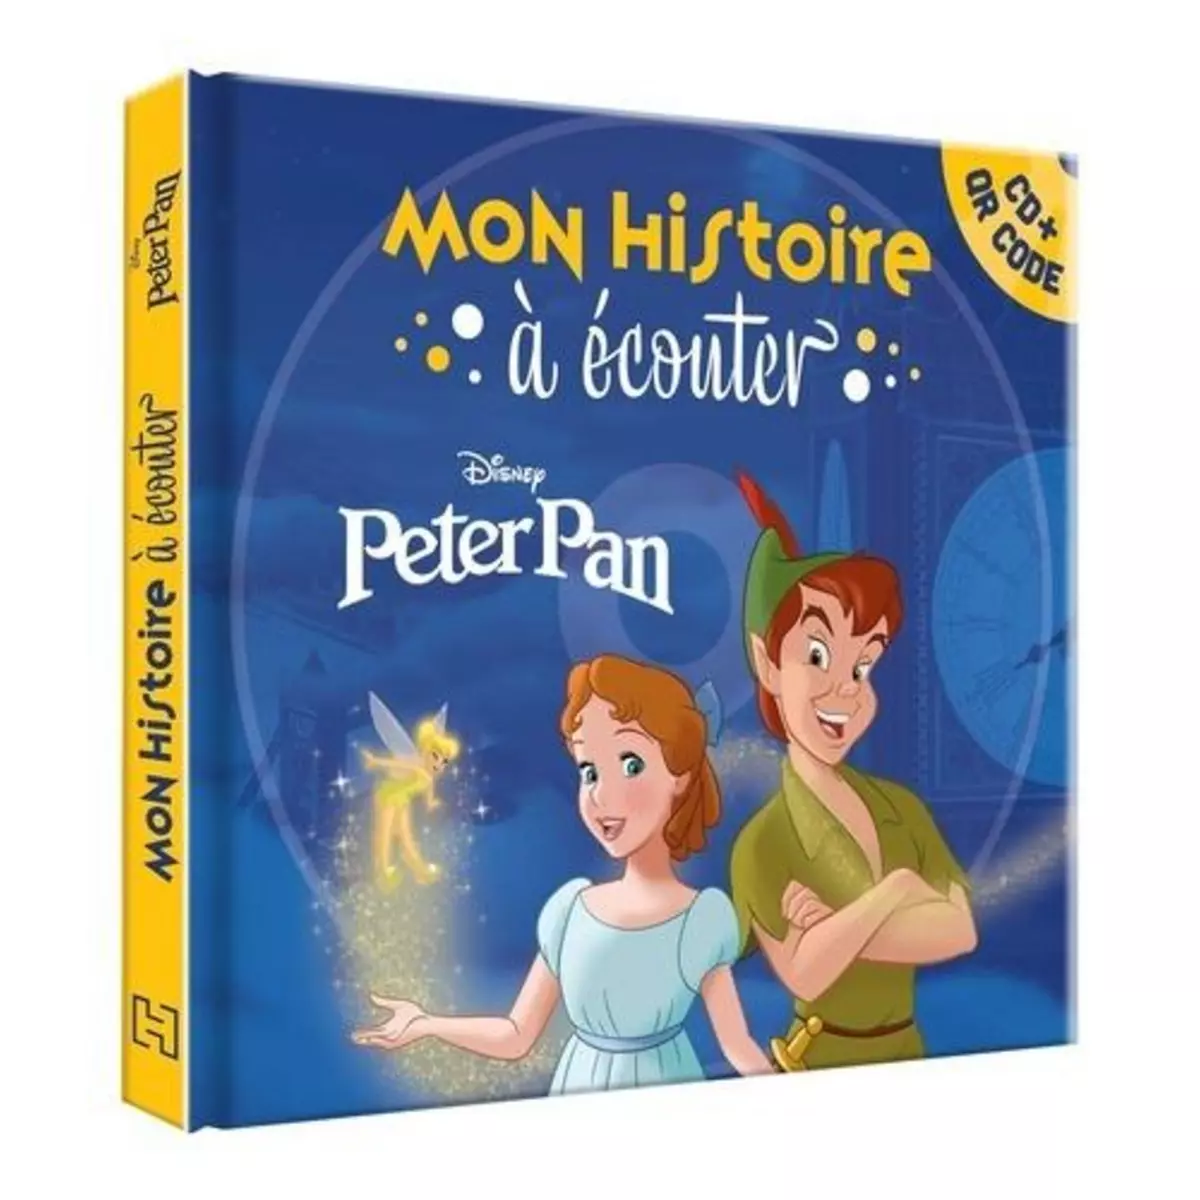  PETER PAN. AVEC 1 CD AUDIO, Disney